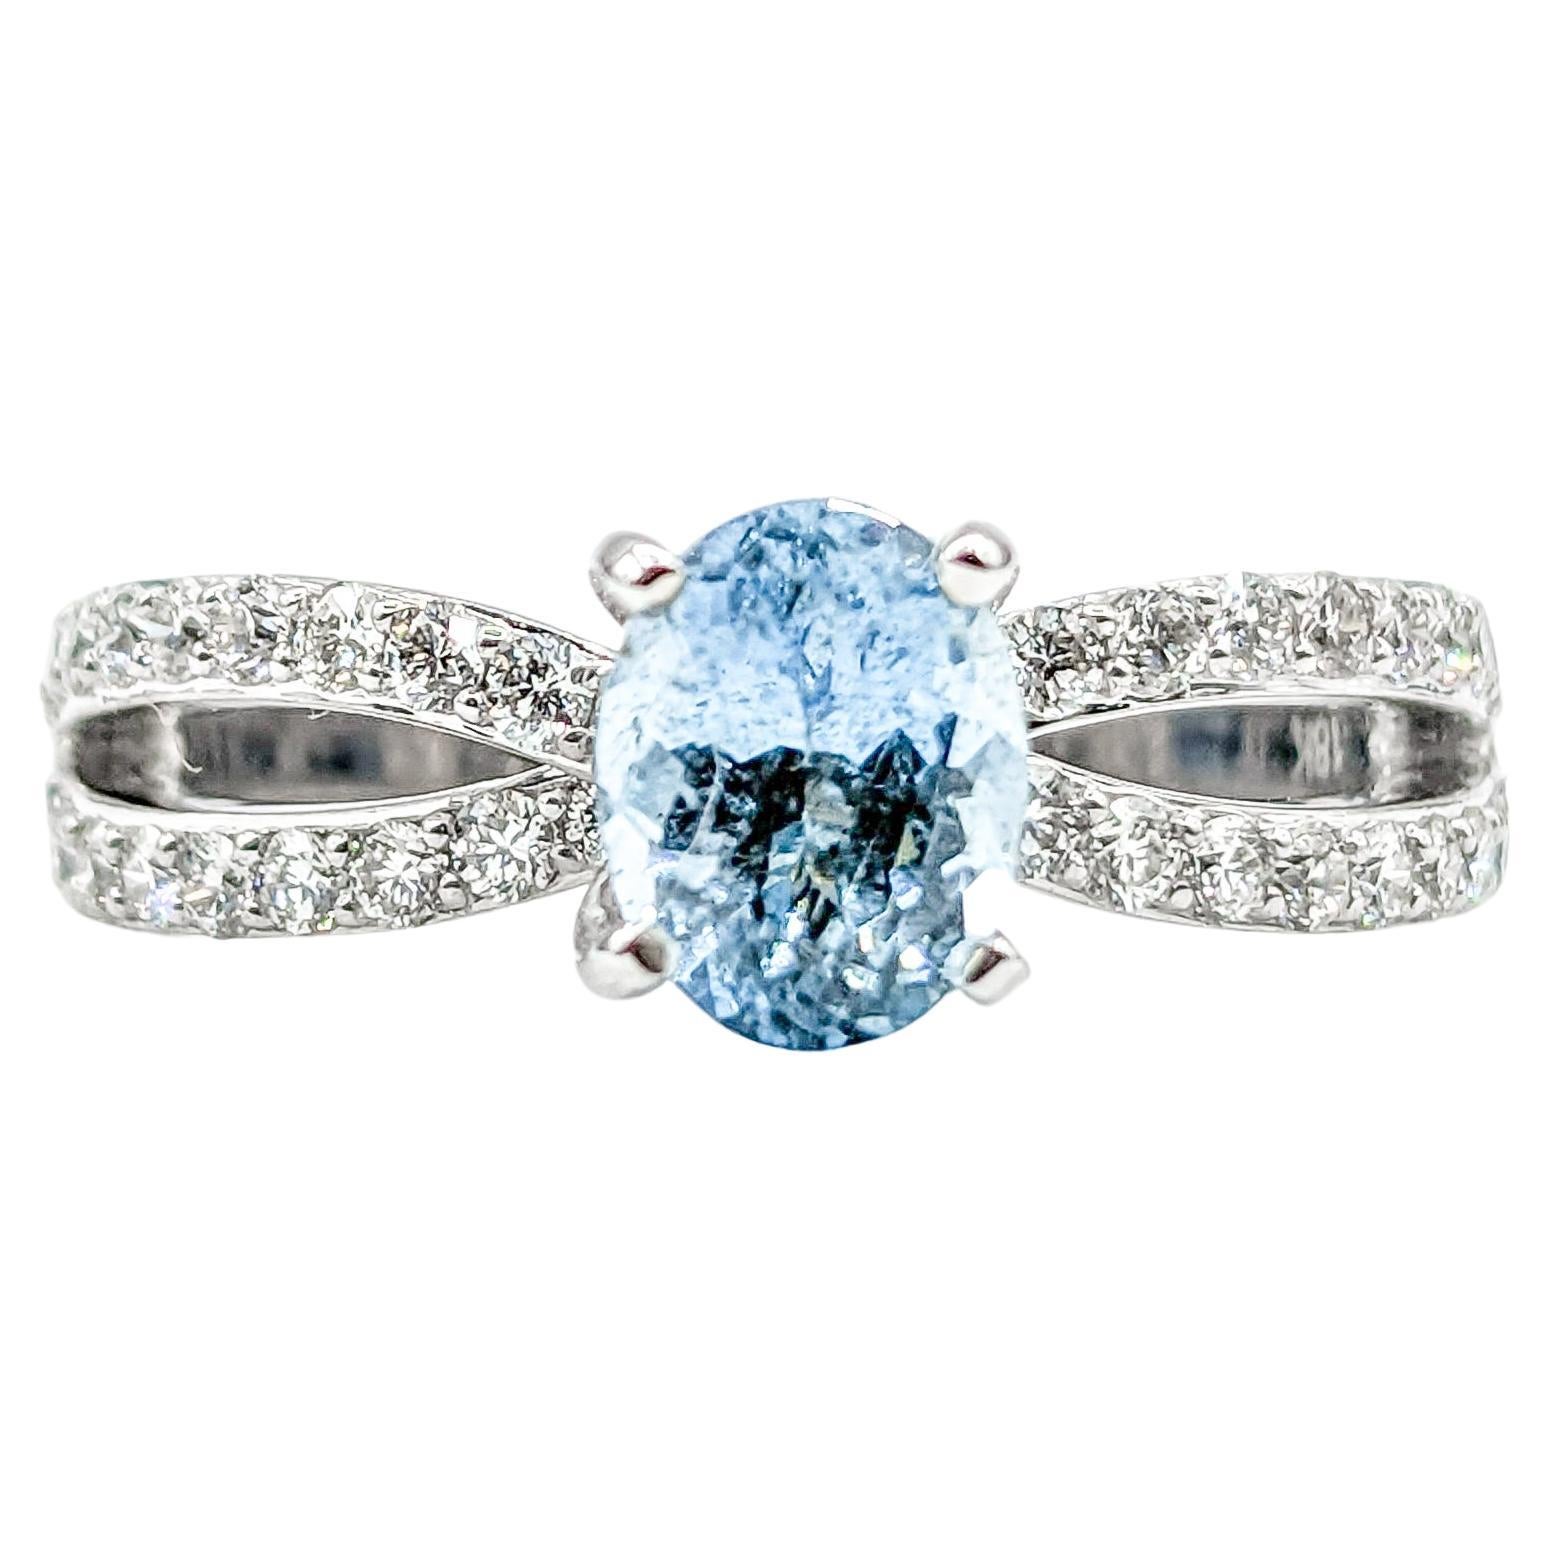 Aquamarine & Diamond Ring in 18k White Gold